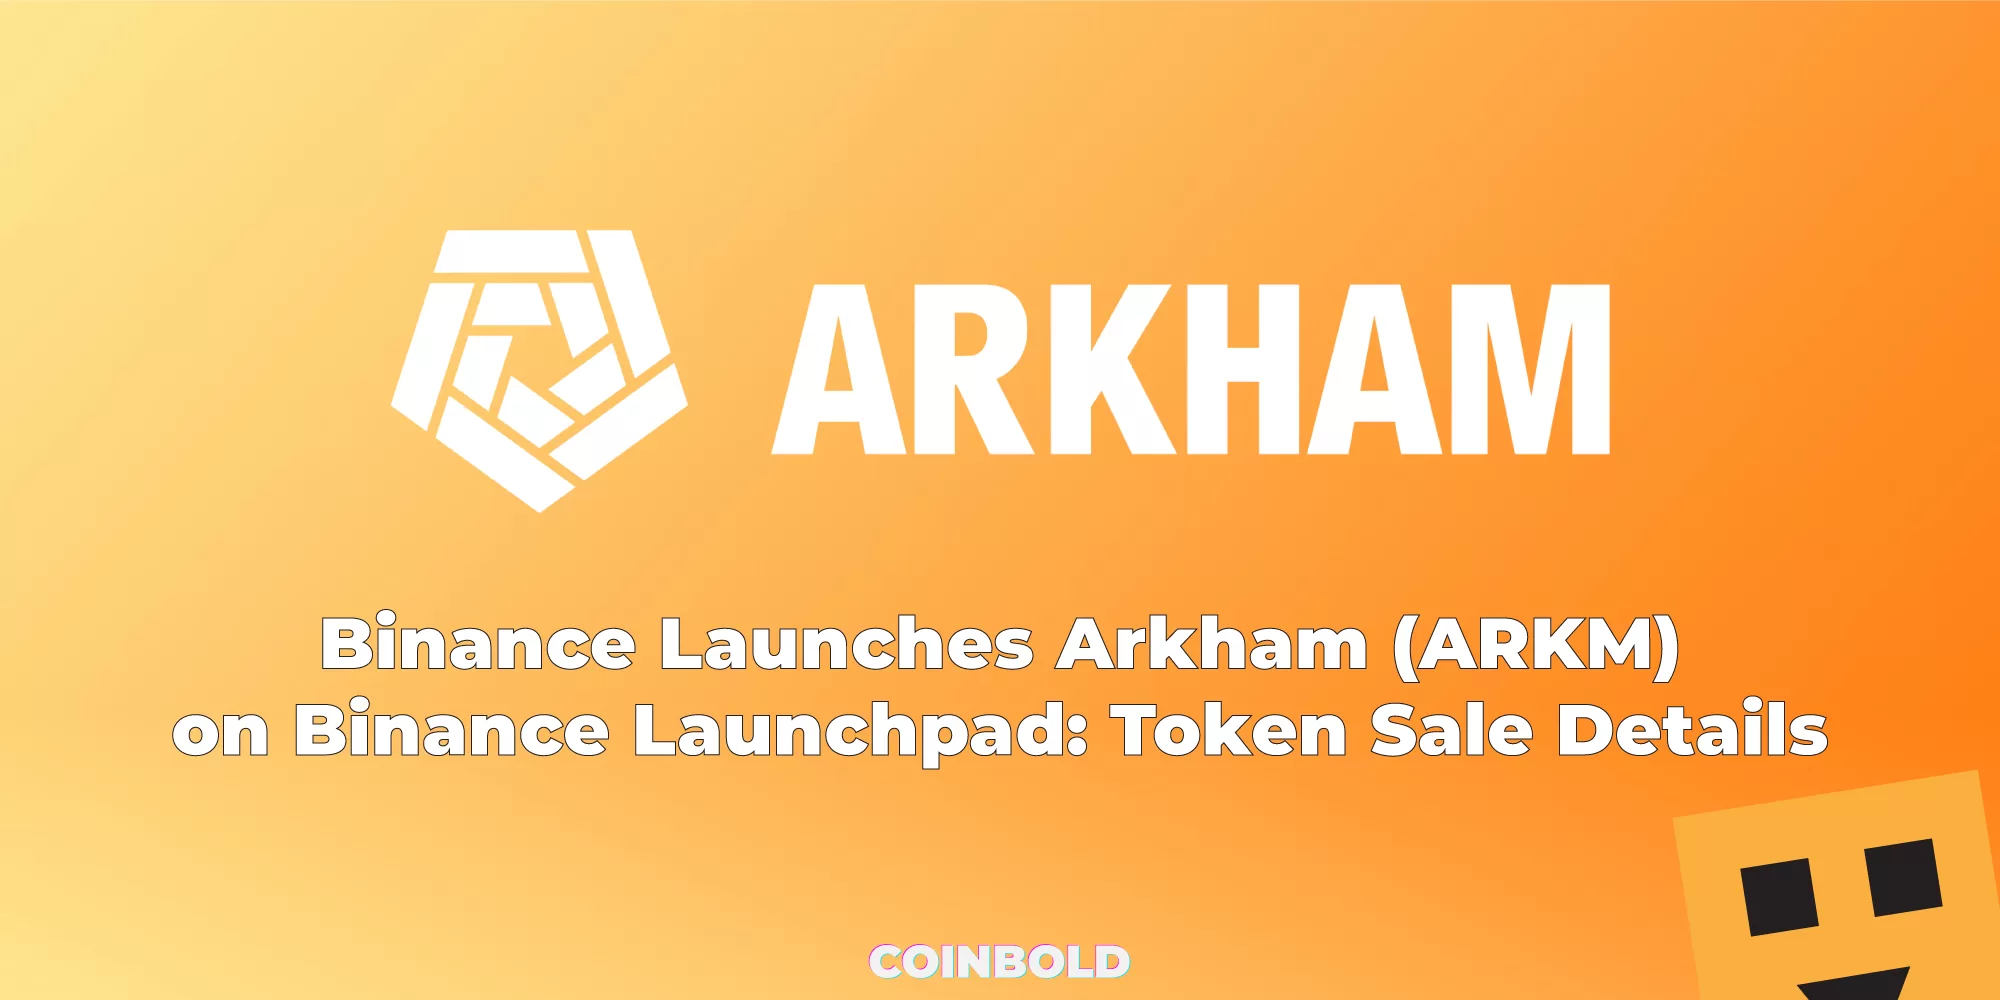 Binance Launches Arkham (ARKM) on Binance Launchpad: Token Sale Details